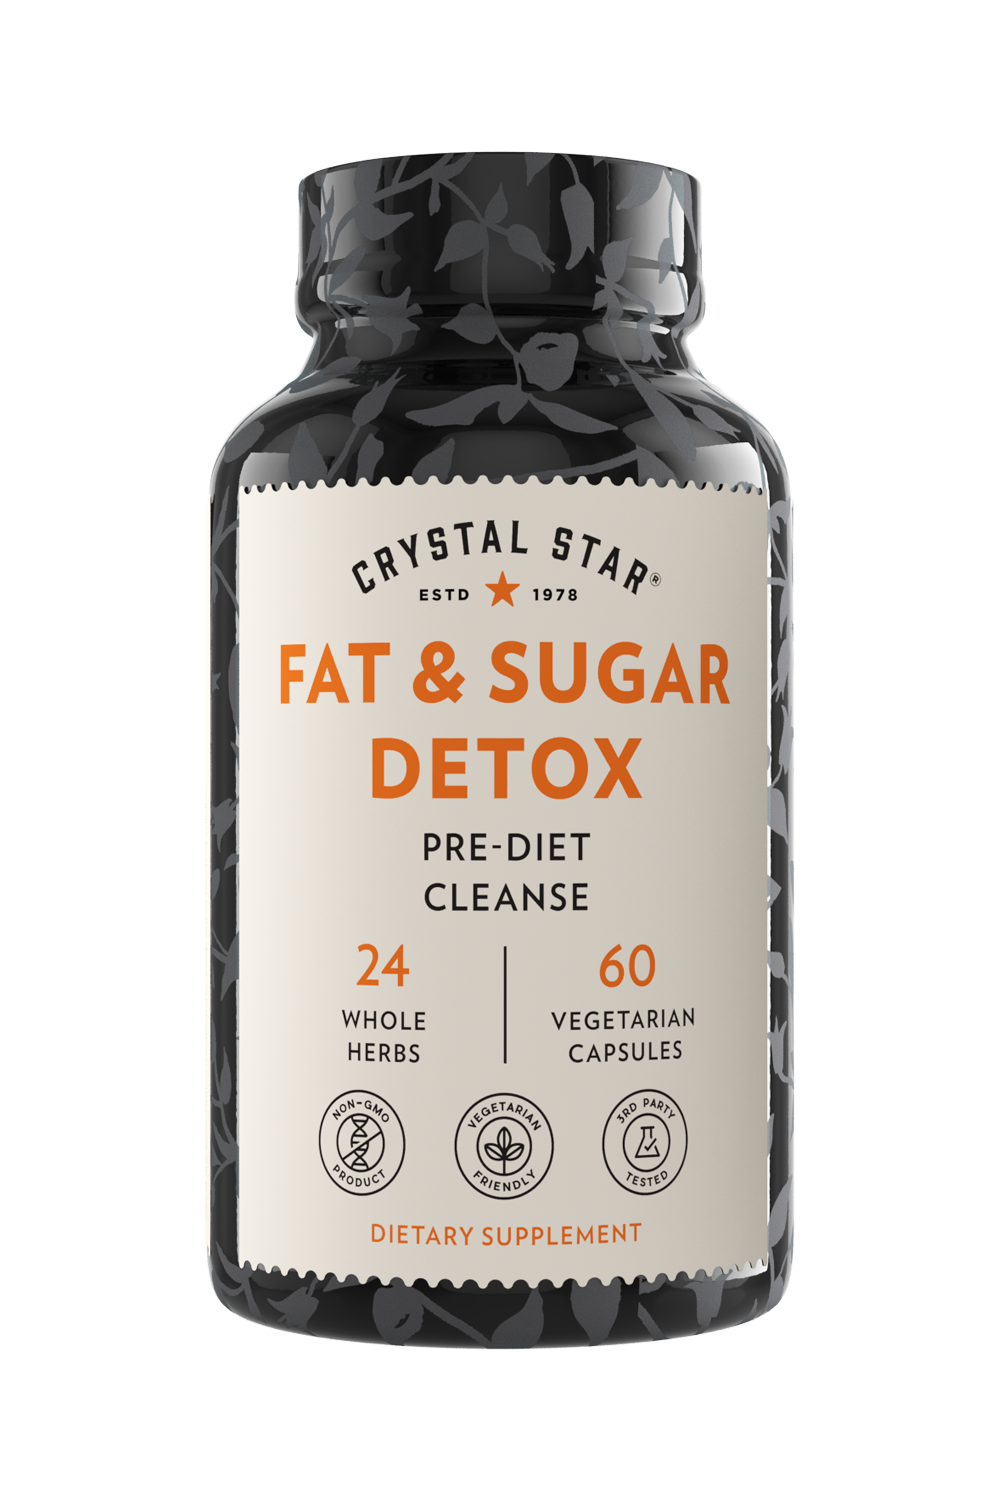 Crystal Star Fat & Sugar Detox supplement for diet reset, Front Side